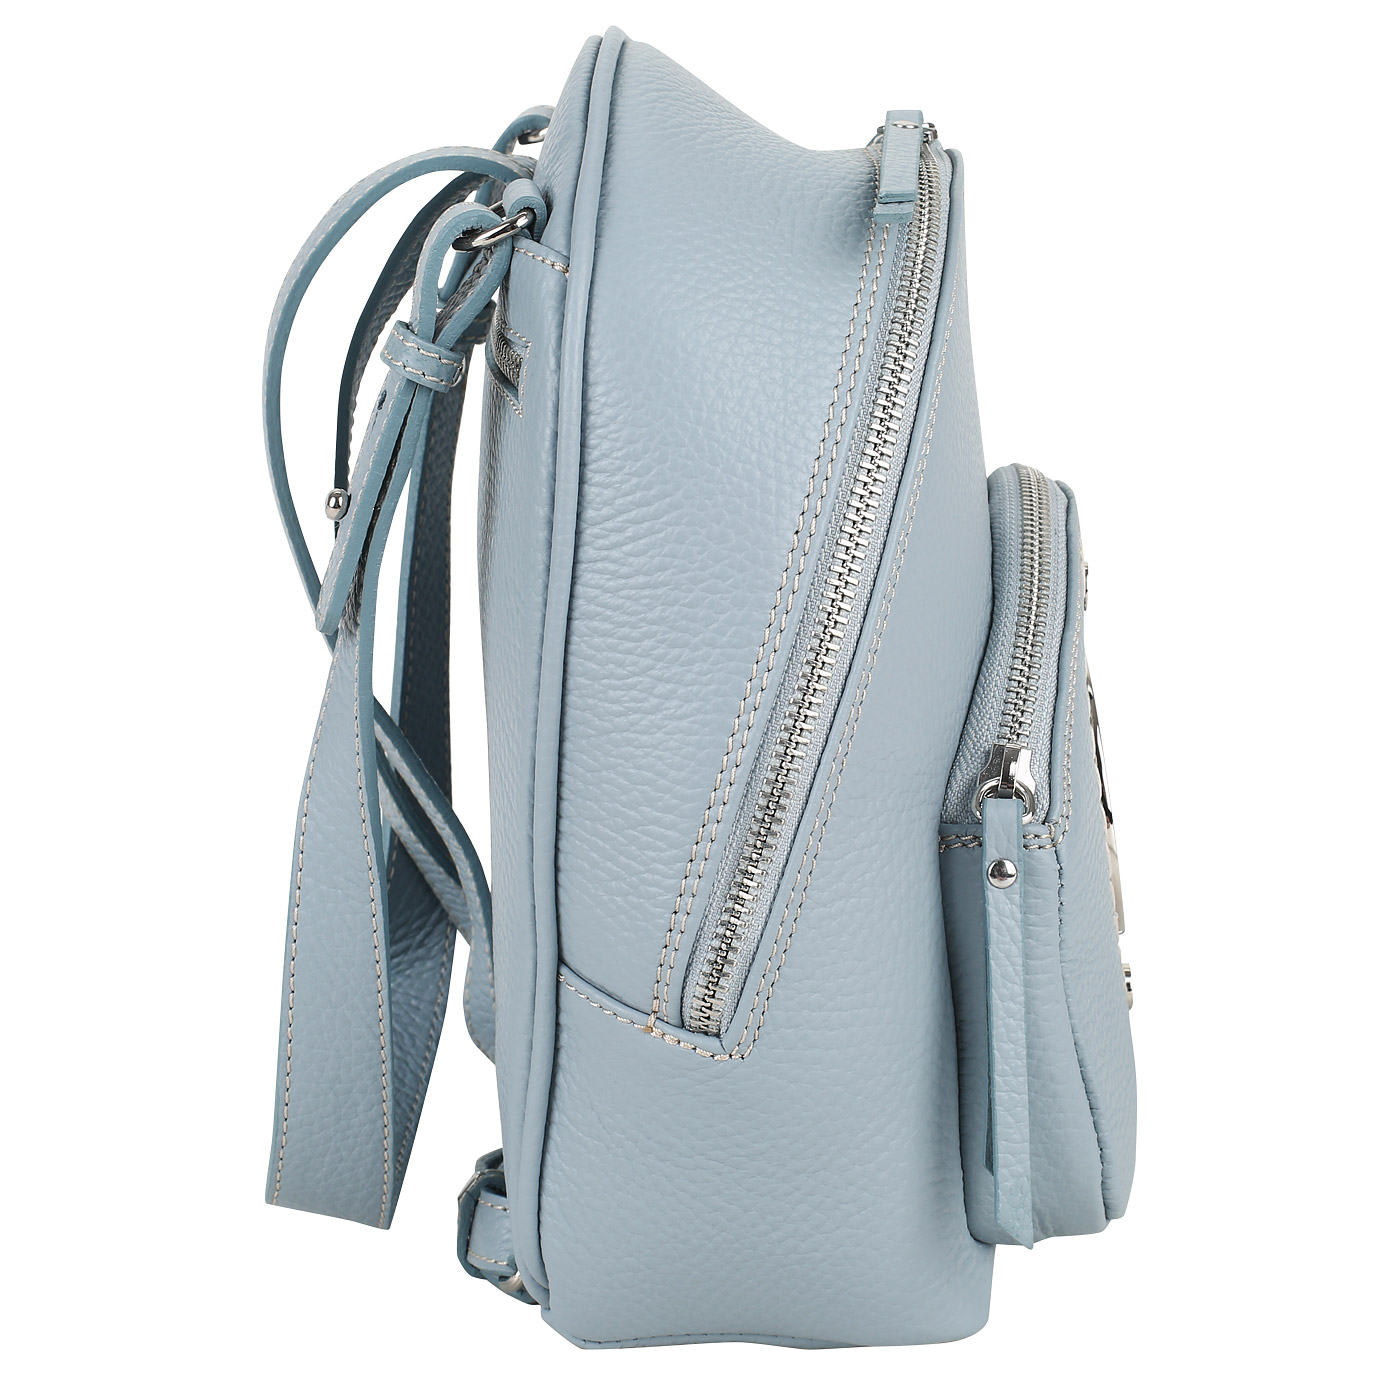 Женский кожаный рюкзак Marina Creazioni X974 MRIV